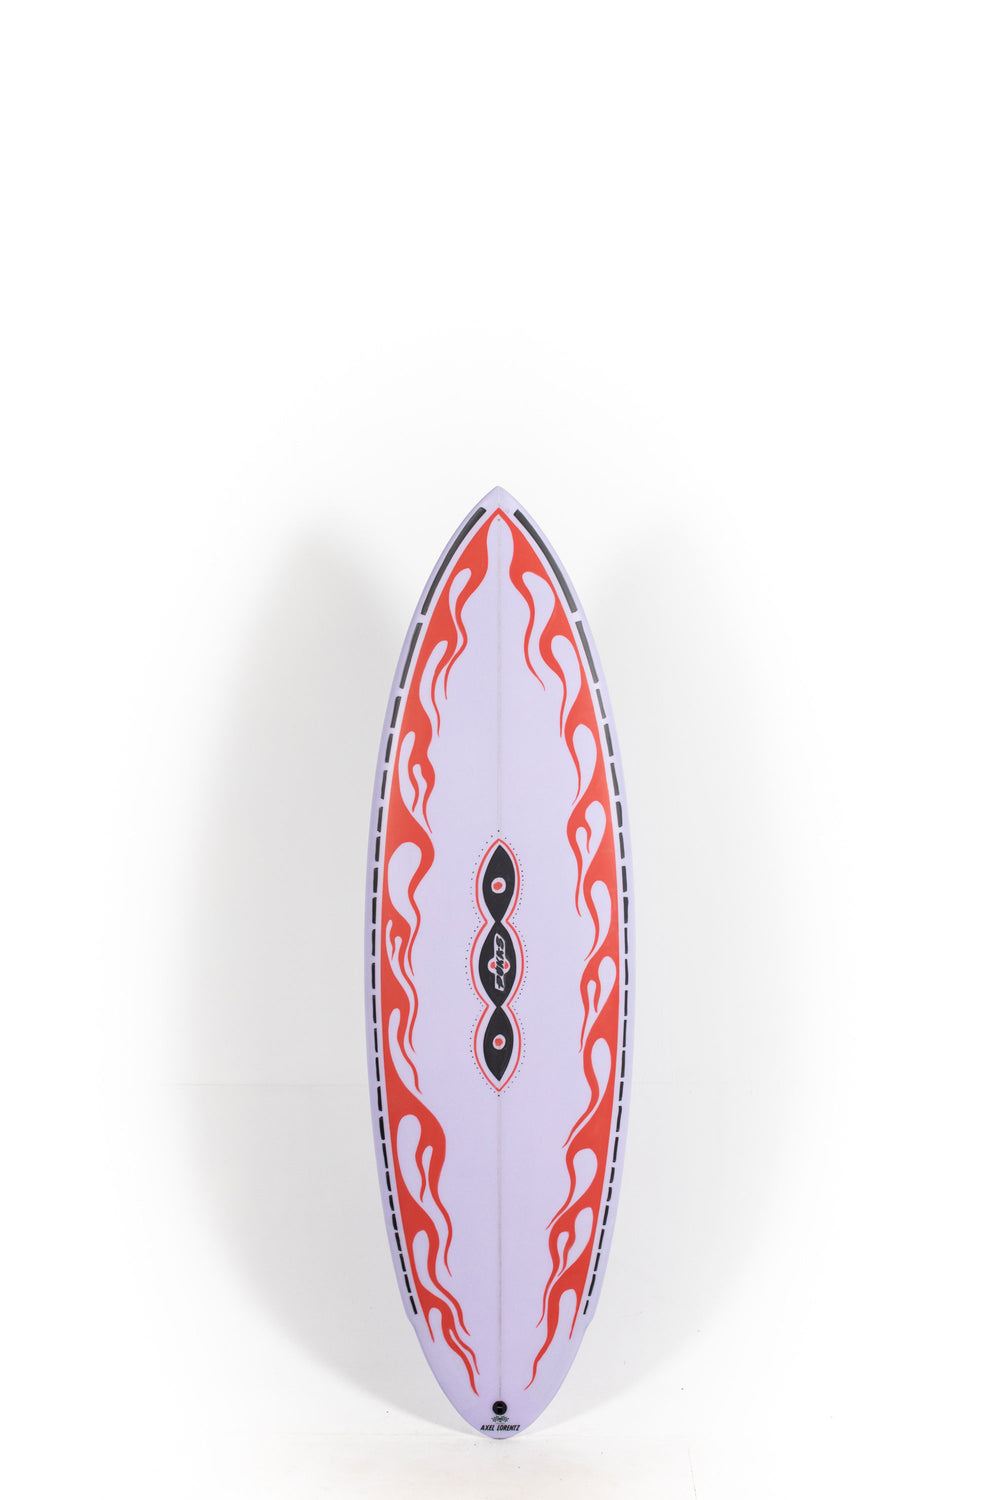 Pukas Surf Shop - Pukas Surfboards - ACID PLAN by Axel Lorentz -  5'10